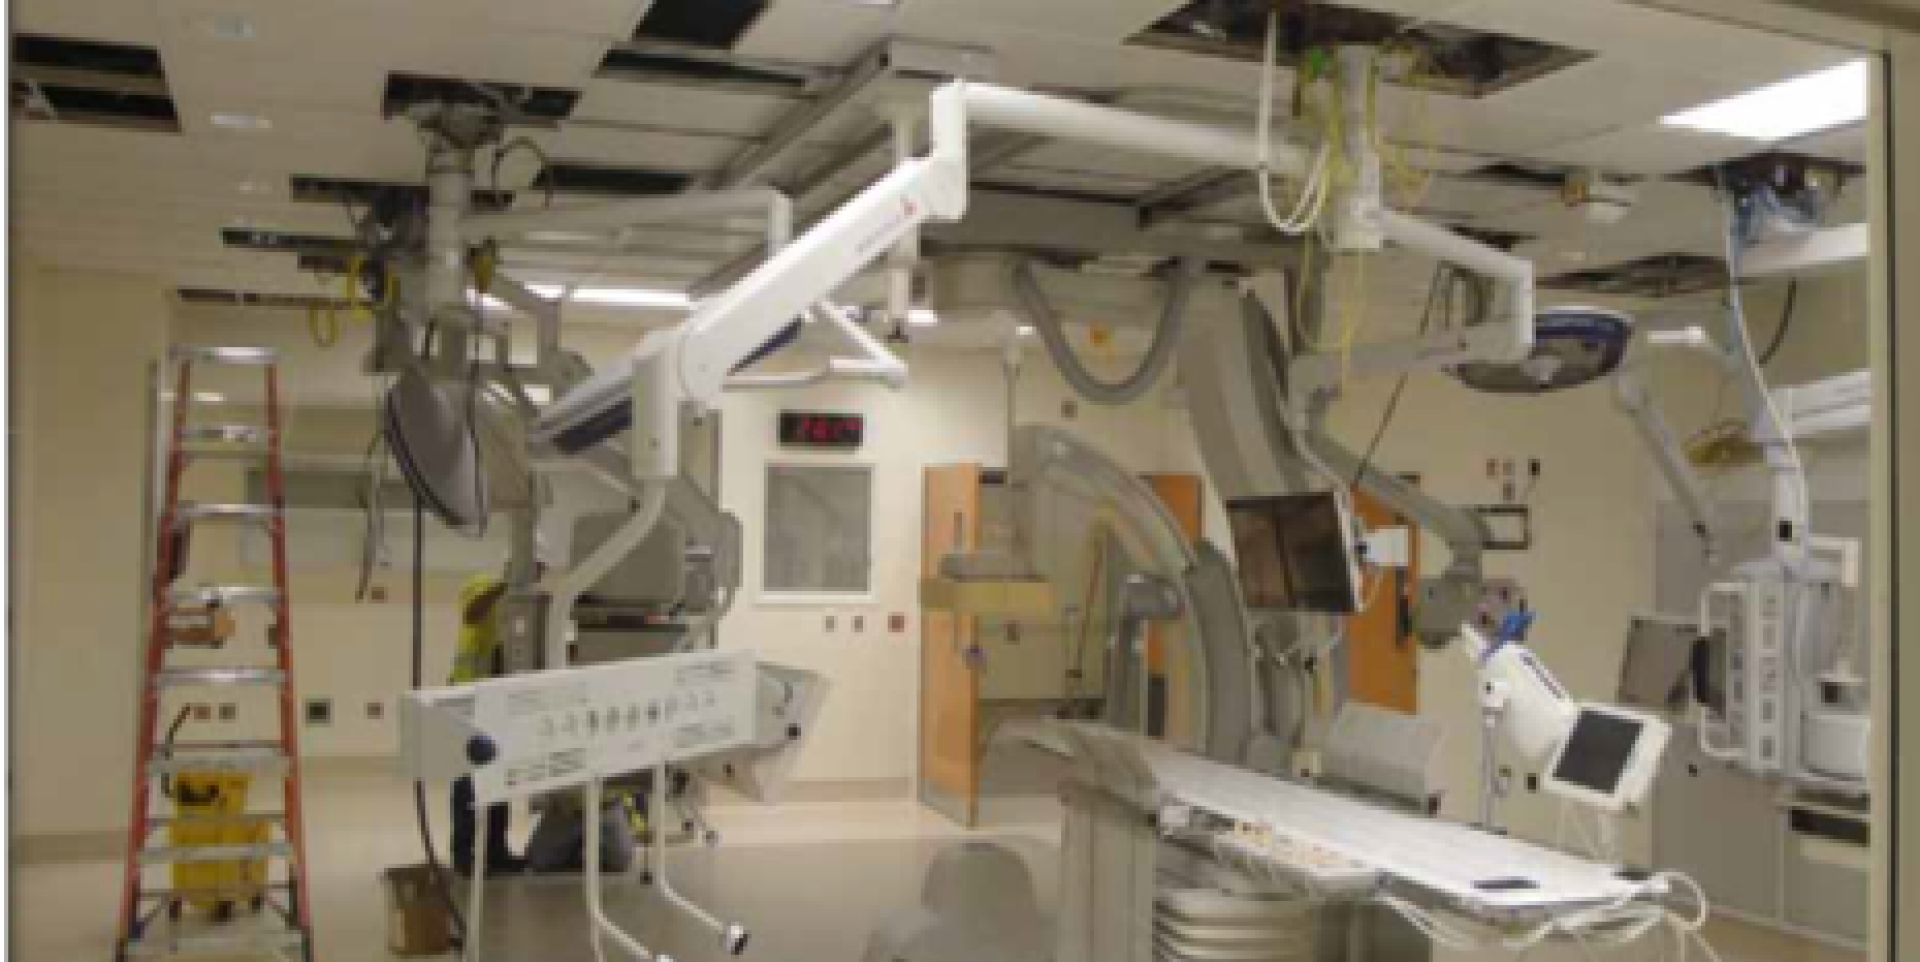 Installation of suspended hospital equipment